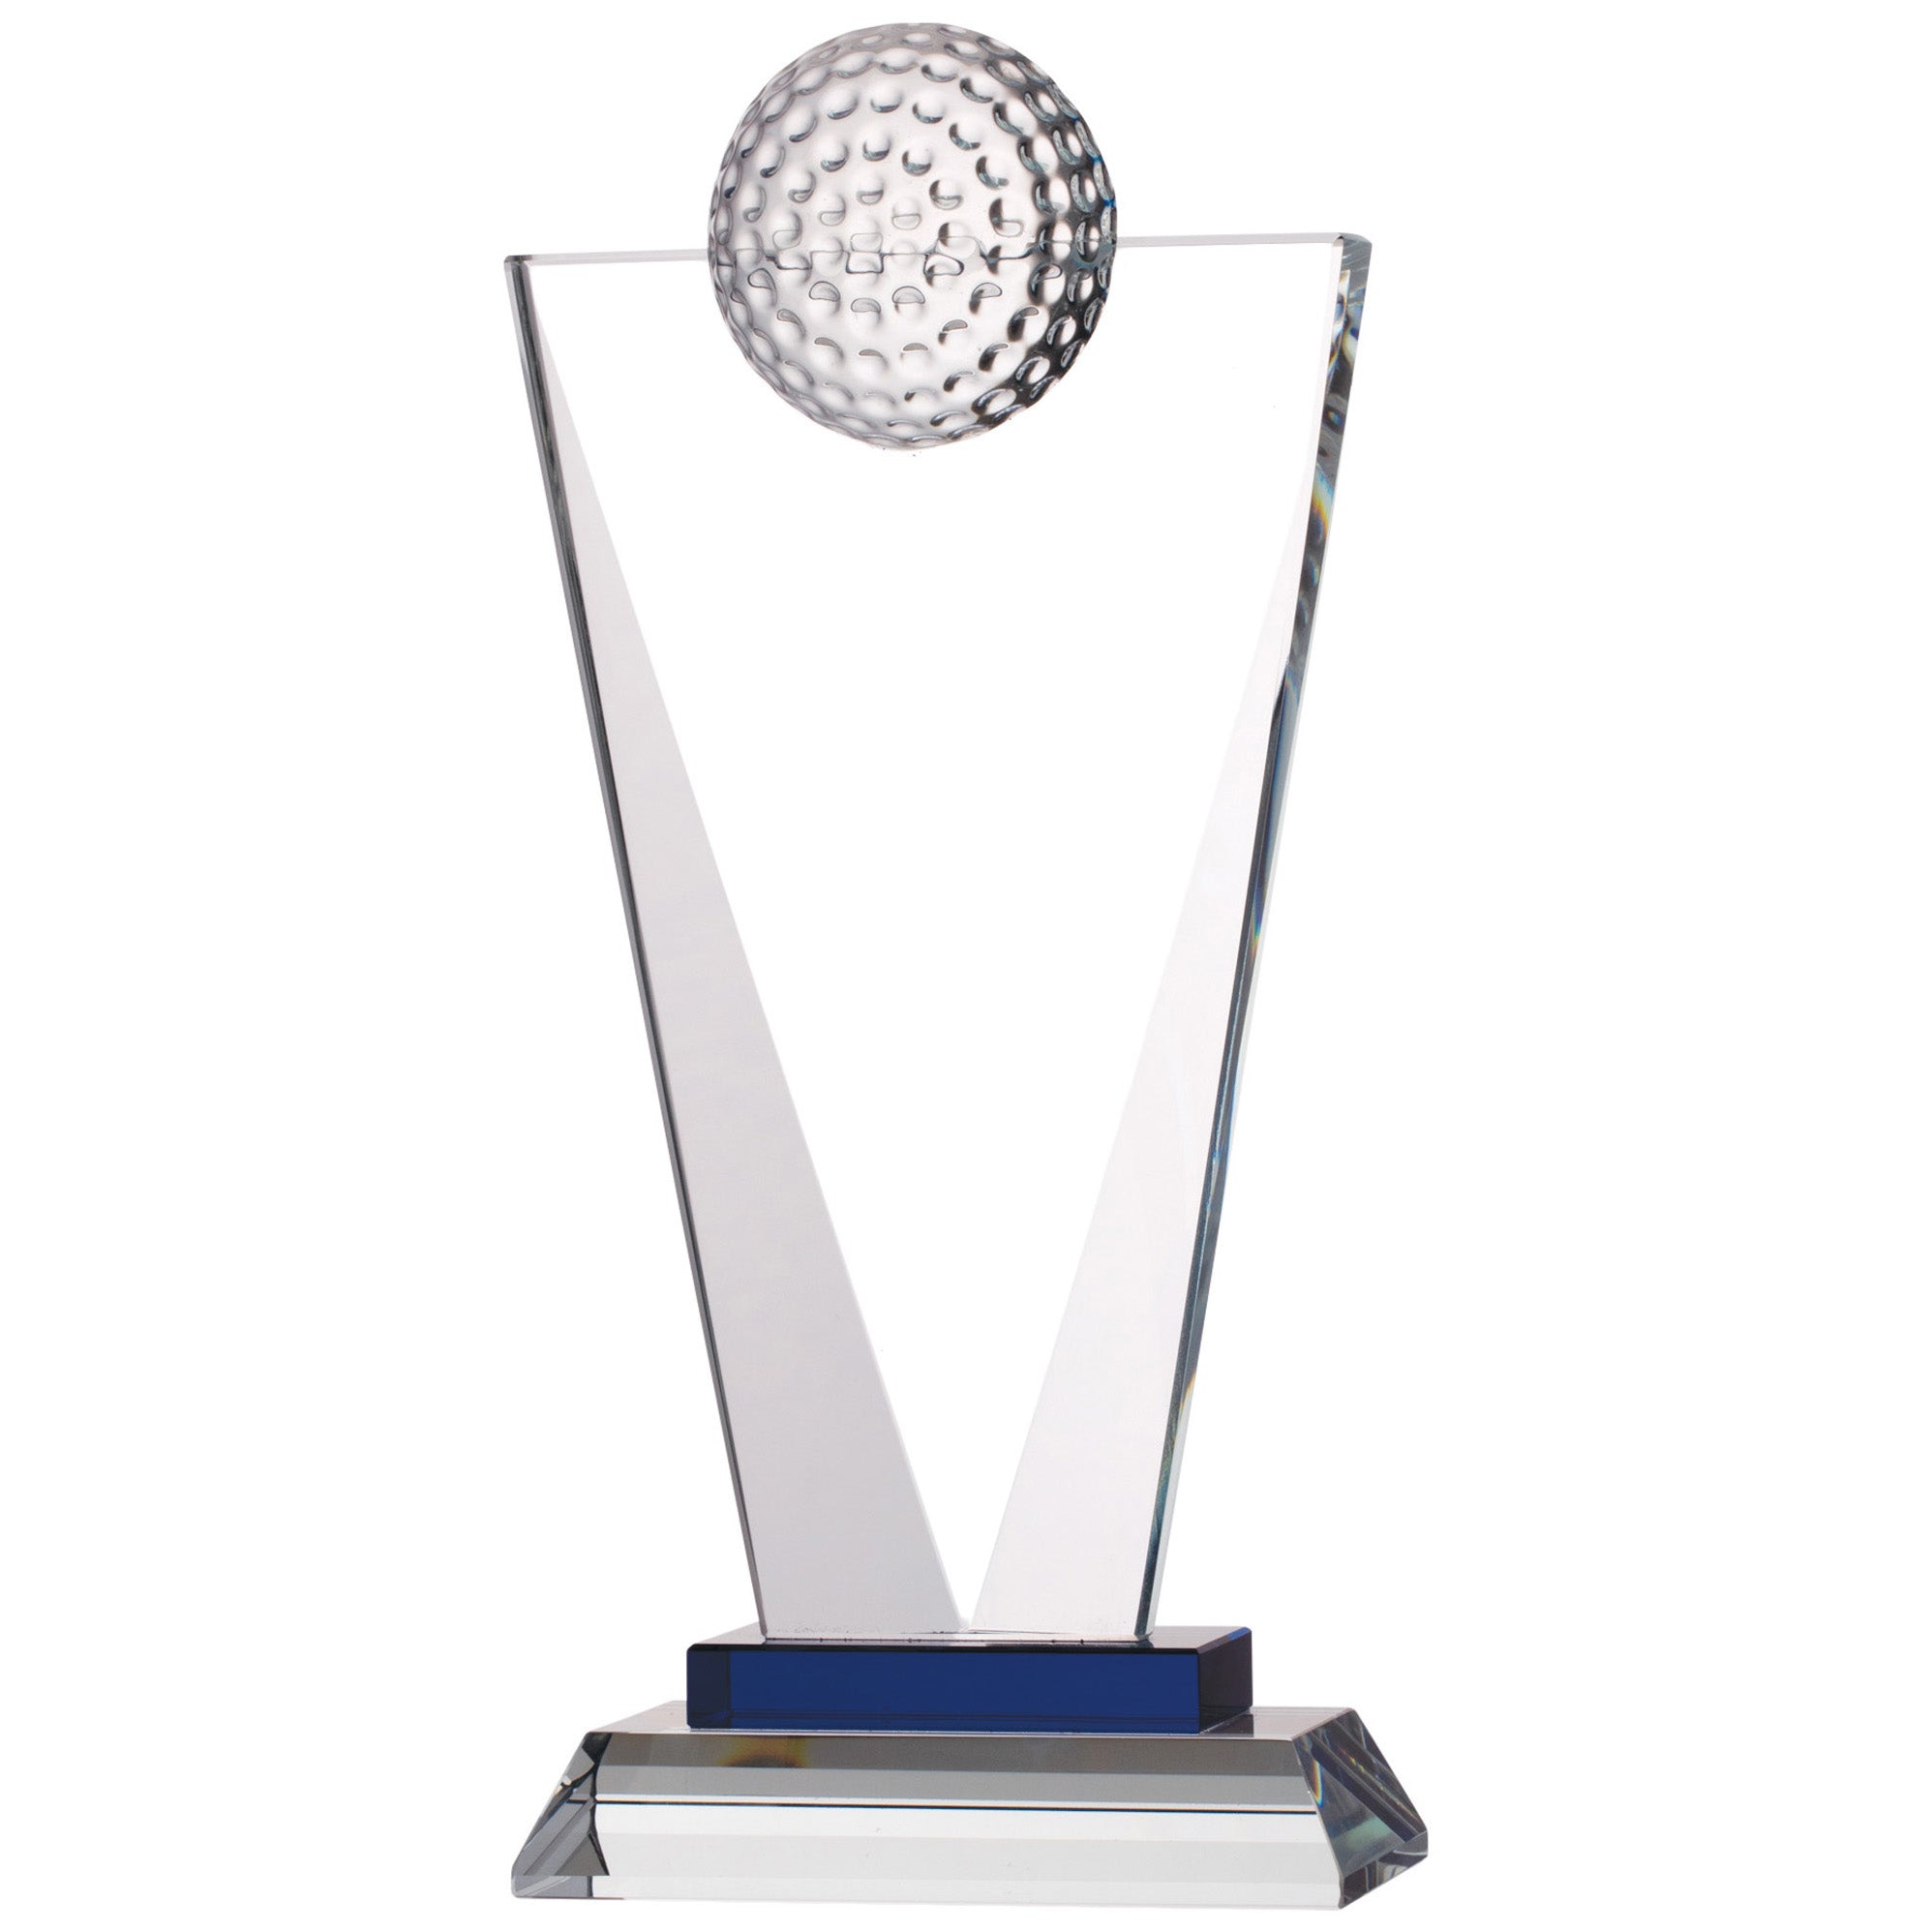 Engraved Triangular Glass Award with Golf Ball